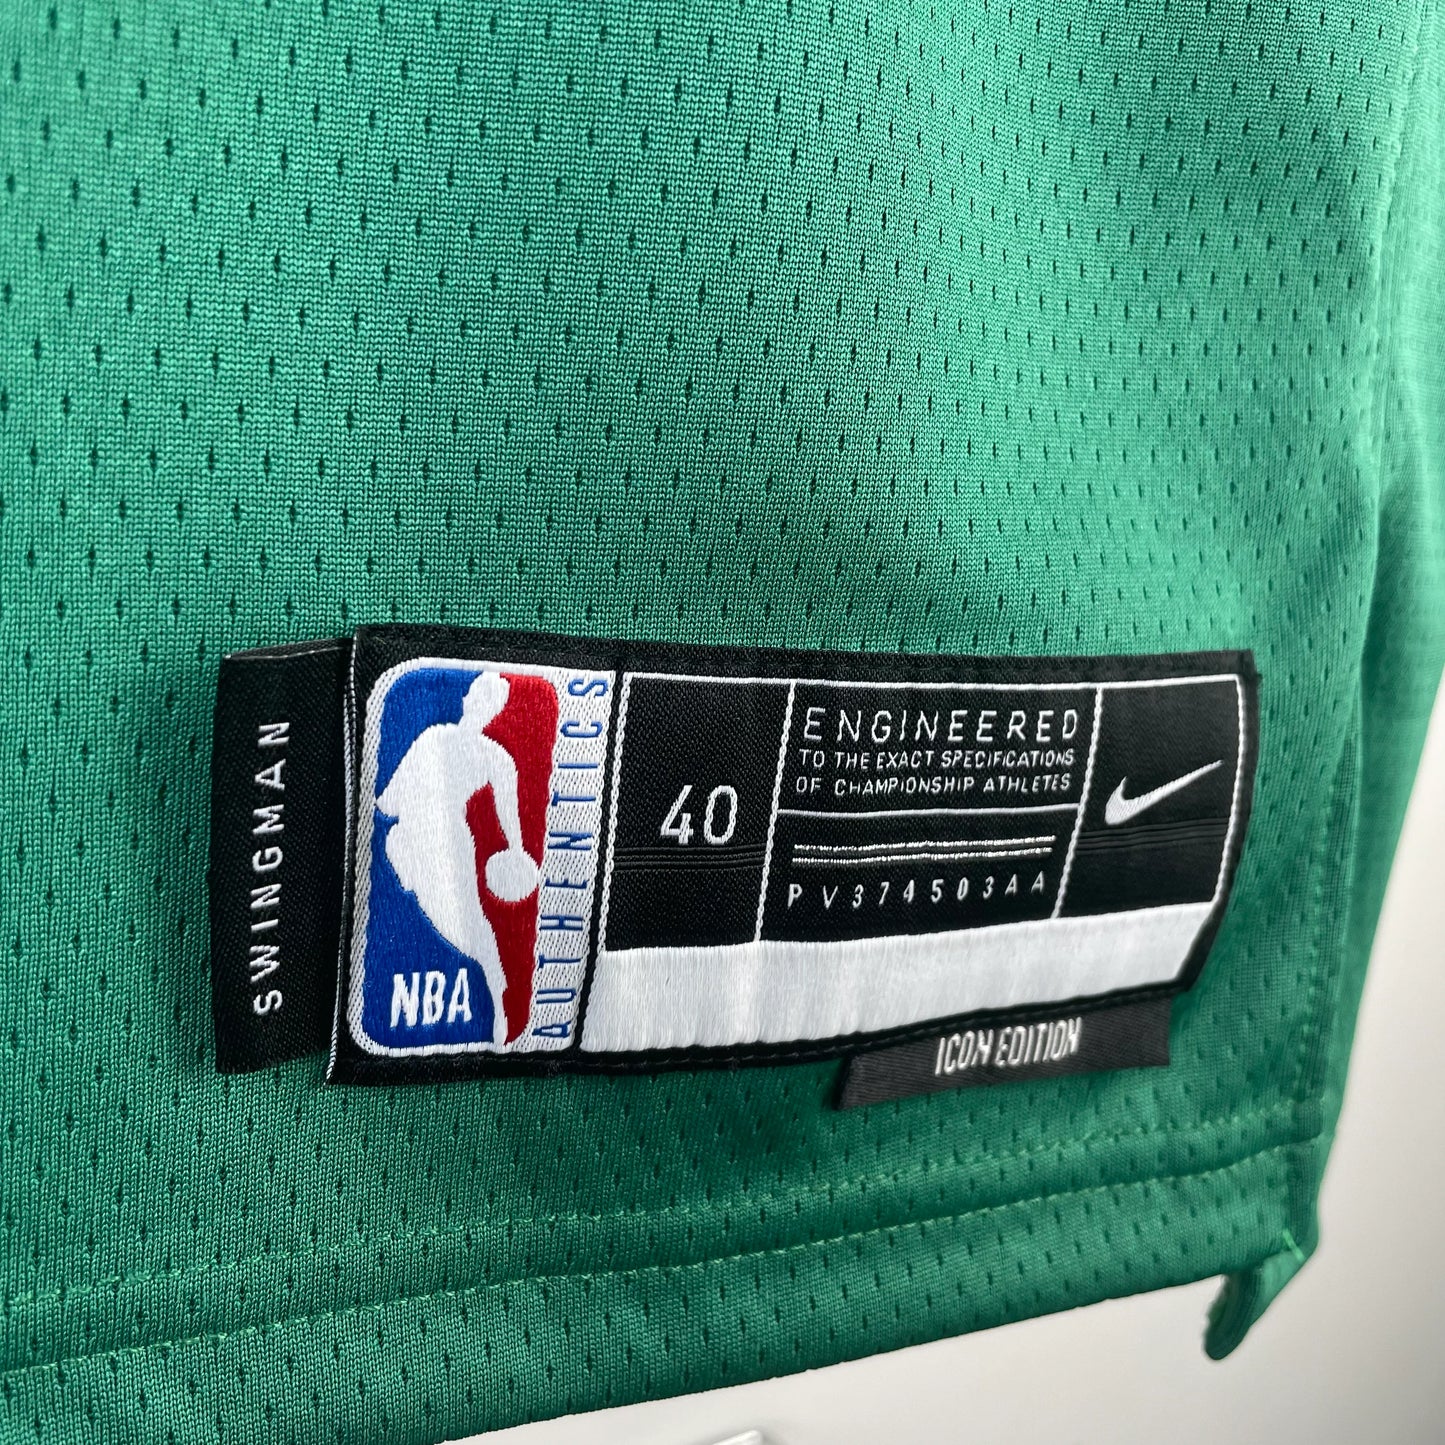 Boston Celtics 23/24 Icon Edition Jersey Nike Swingman